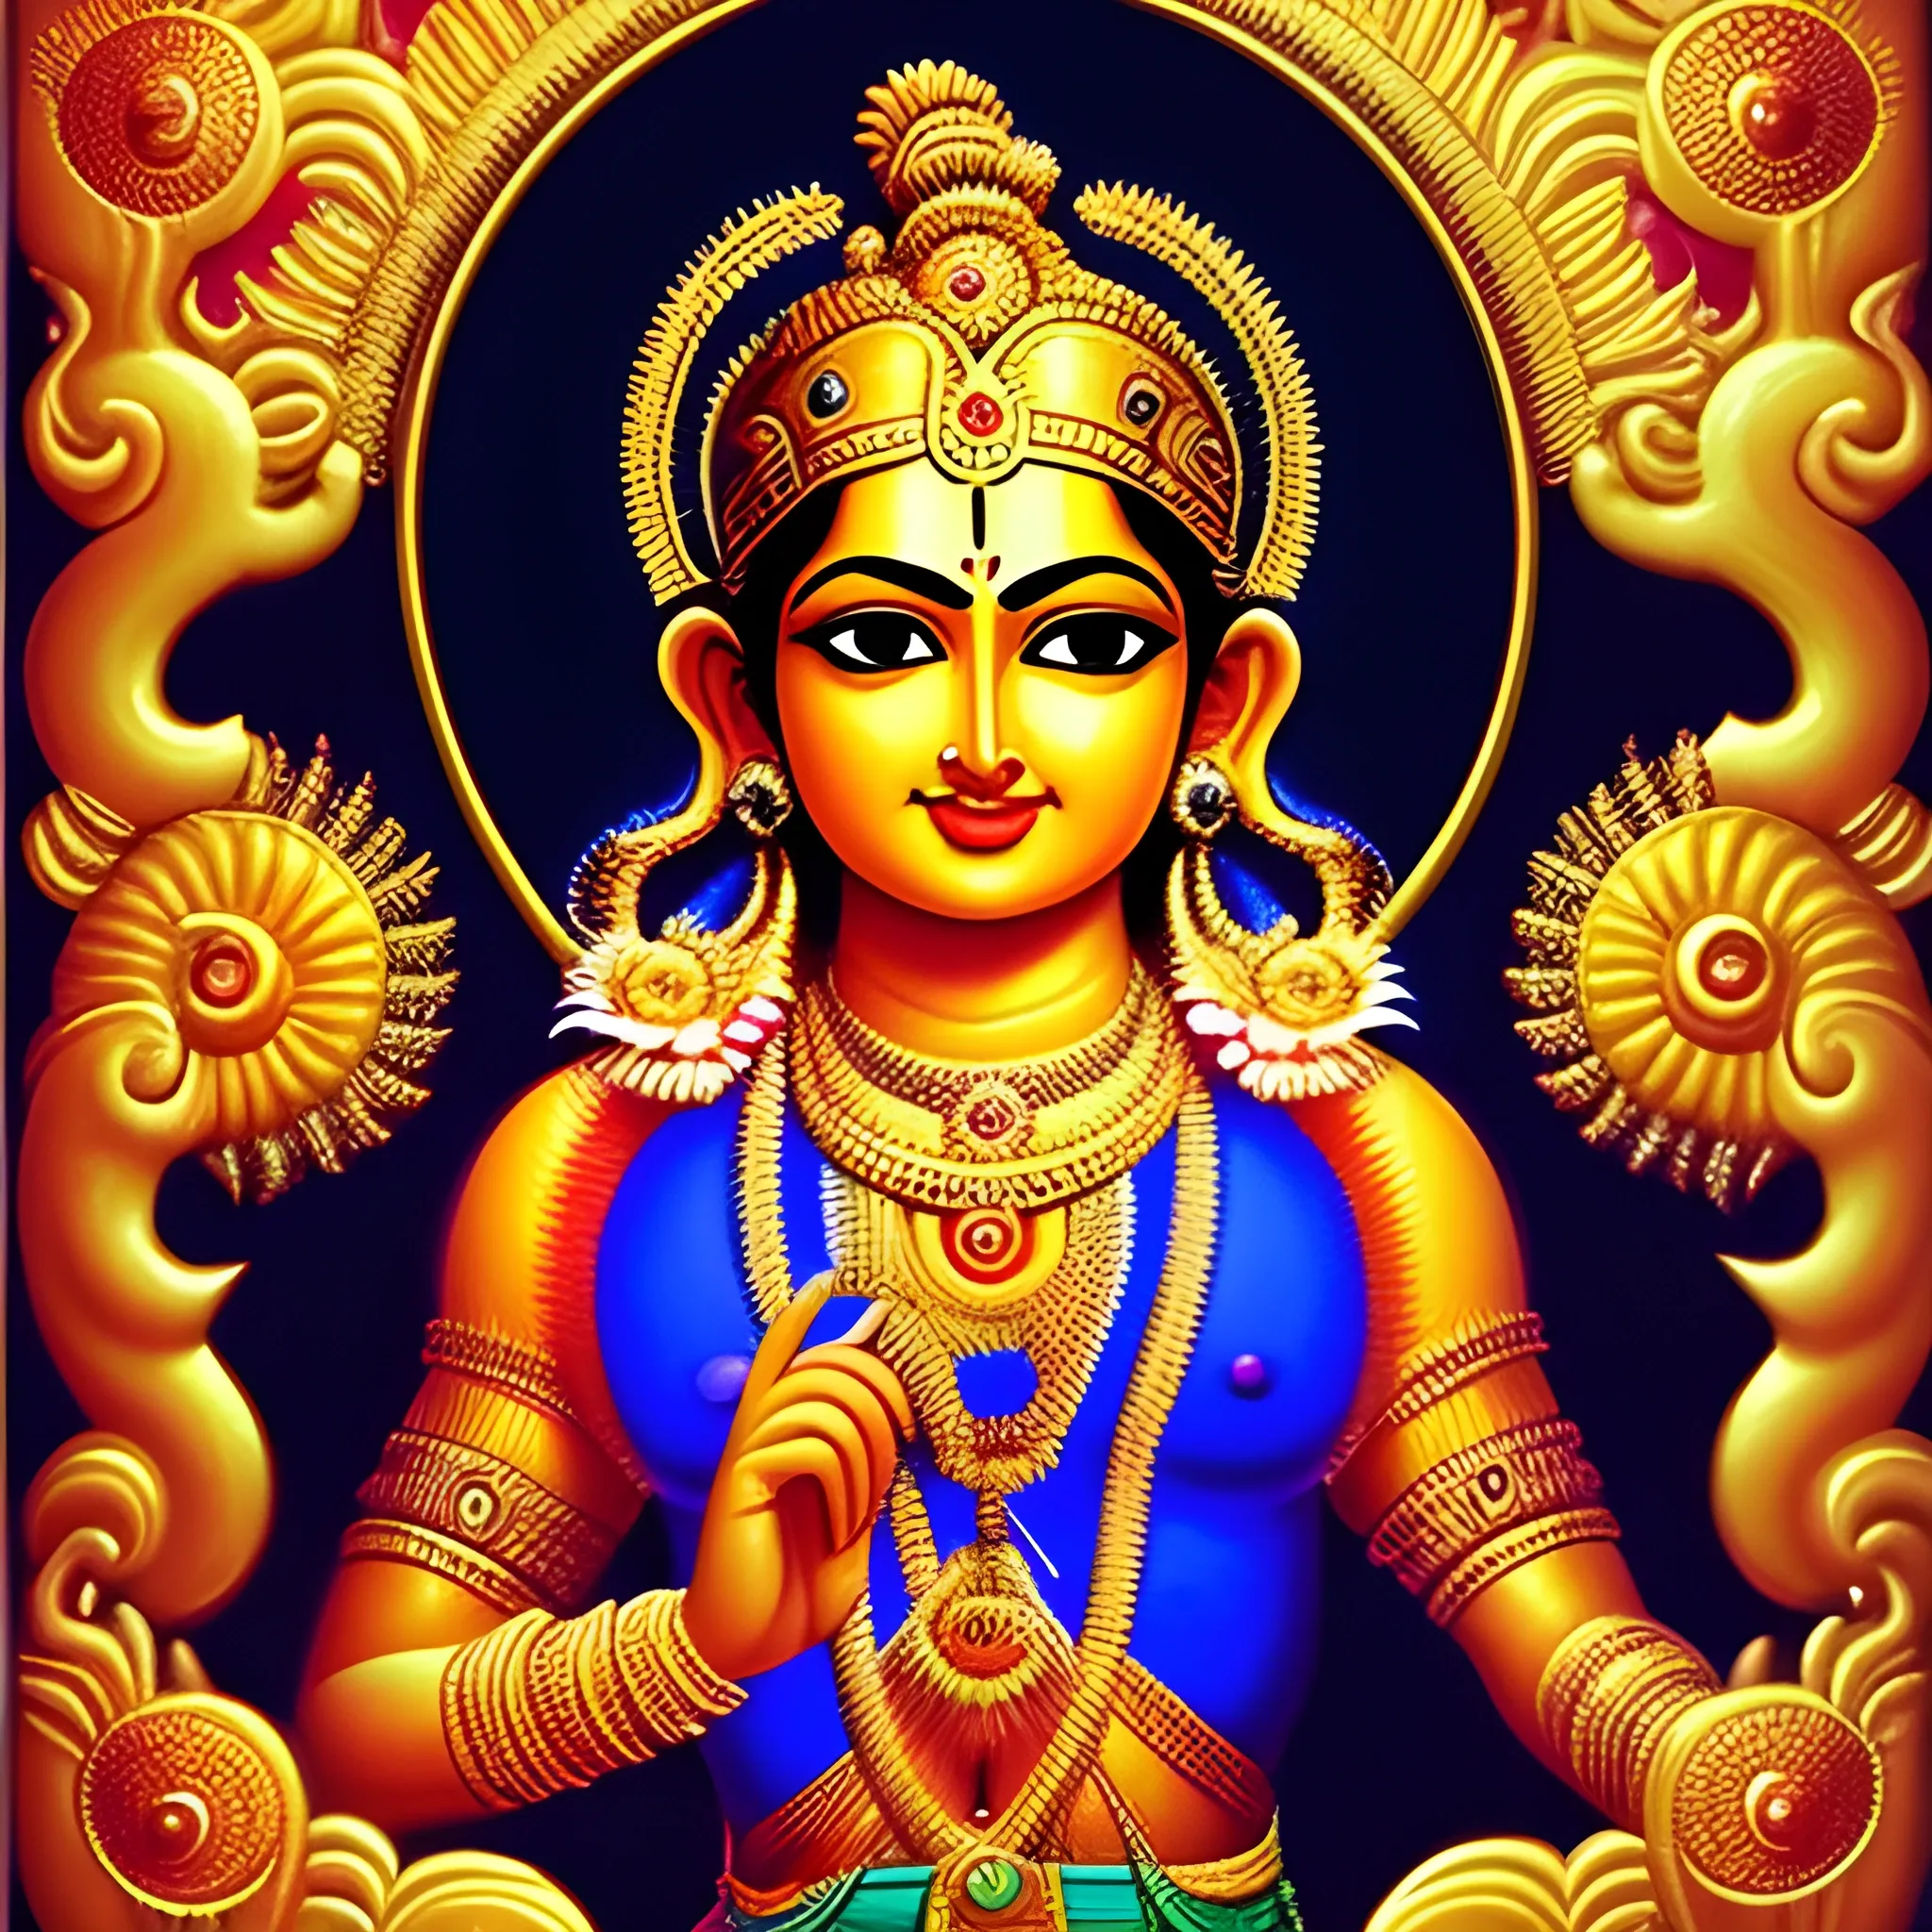 a beautiful portrait of hindu god lord rama